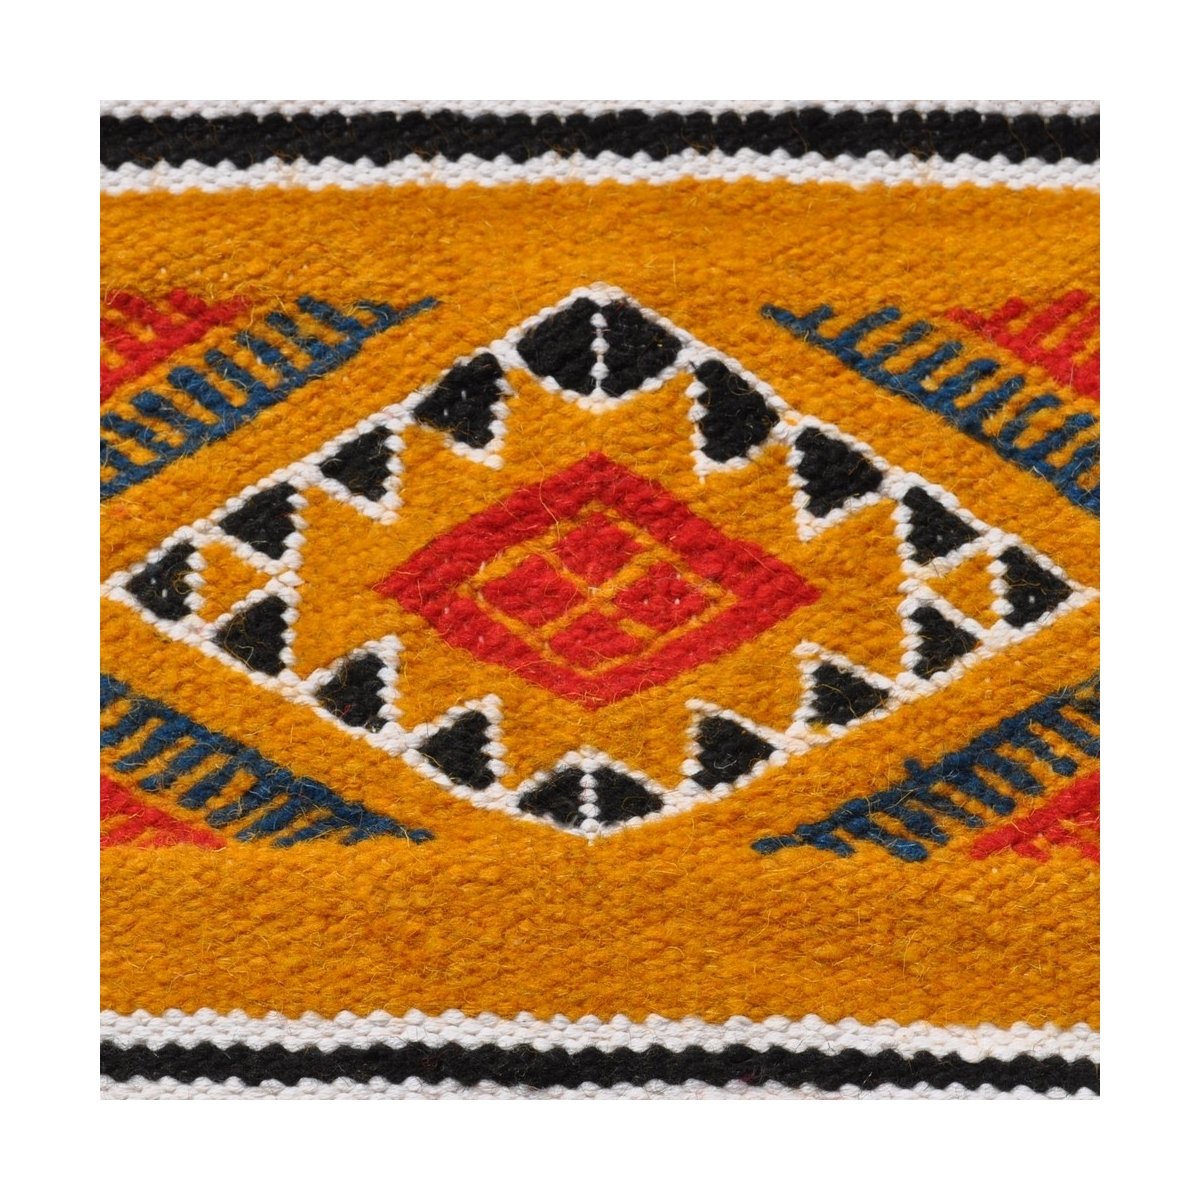 Berber tapijt Tapijt Kilim Chemtou 145x250 Geel/Wit (Handgeweven, Wol, Tunesië) Tunesisch kilimdeken, Marokkaanse stijl. Rechtho